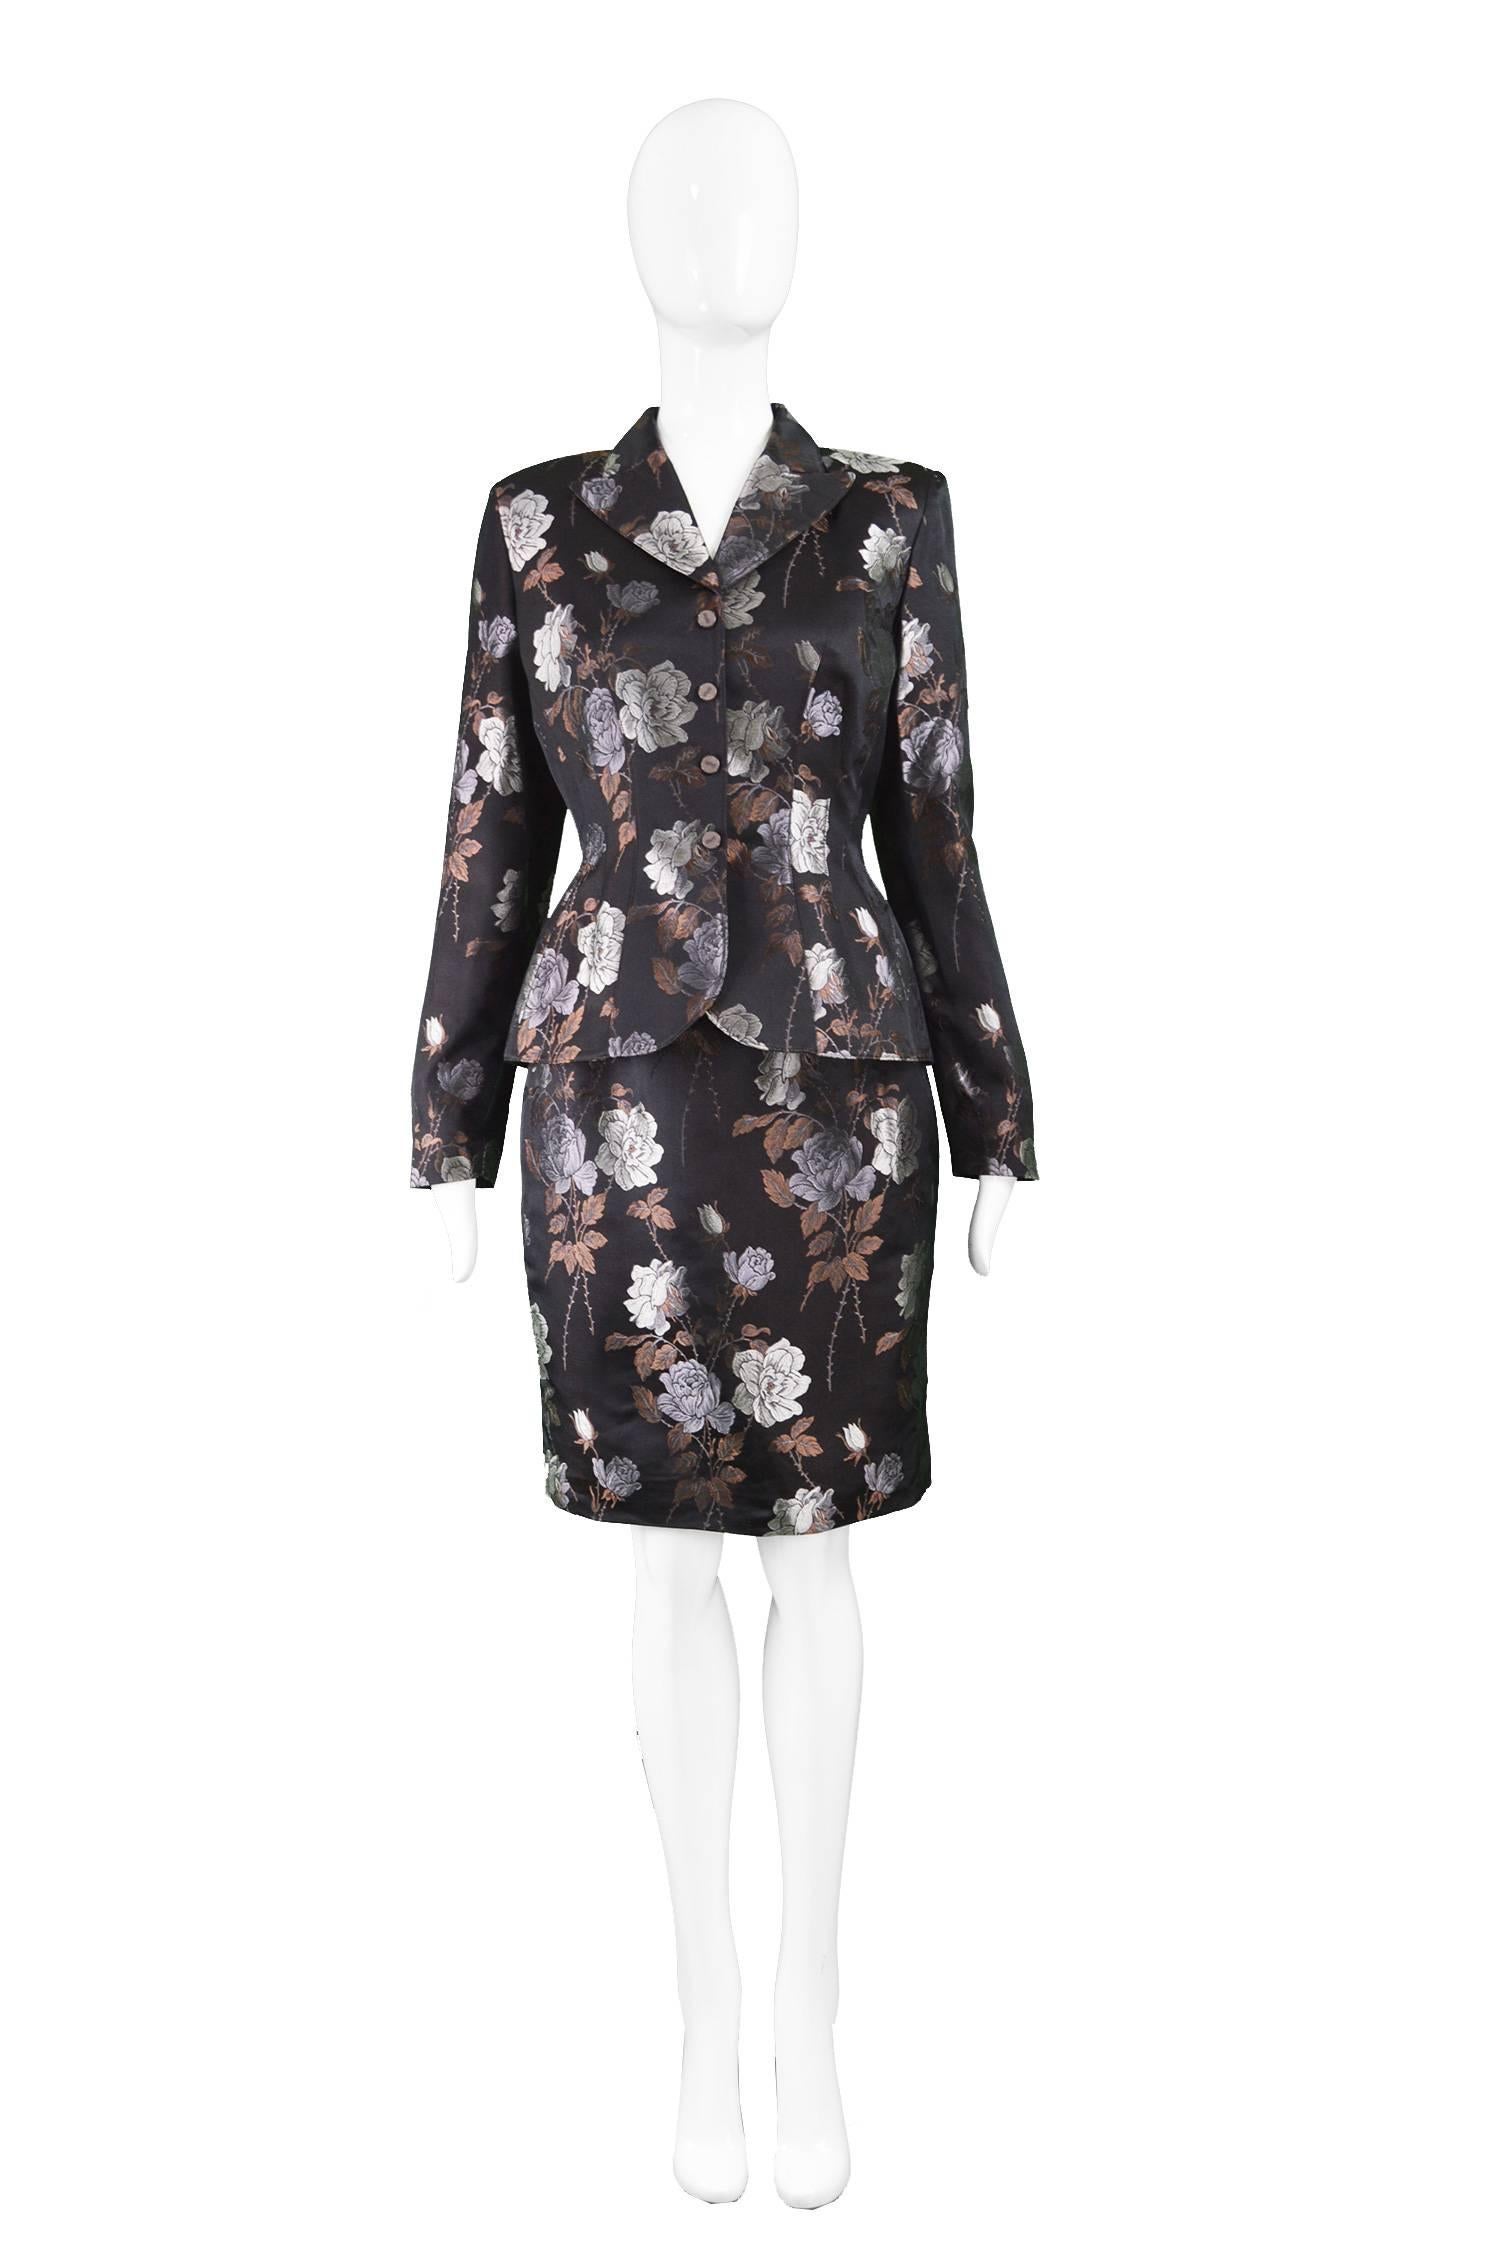 Thierry Mugler Black Satin Jacquard Vintage Two Piece Skirt Suit, 1990s

Estimated Size: UK 10-12/ US 6-8/ EU 38-40. Please check measurements.
Jacket
Bust - 38” / 96cm (allow a couple of inches room for movement)
Waist - 28” / 71cm
Length (Shoulder